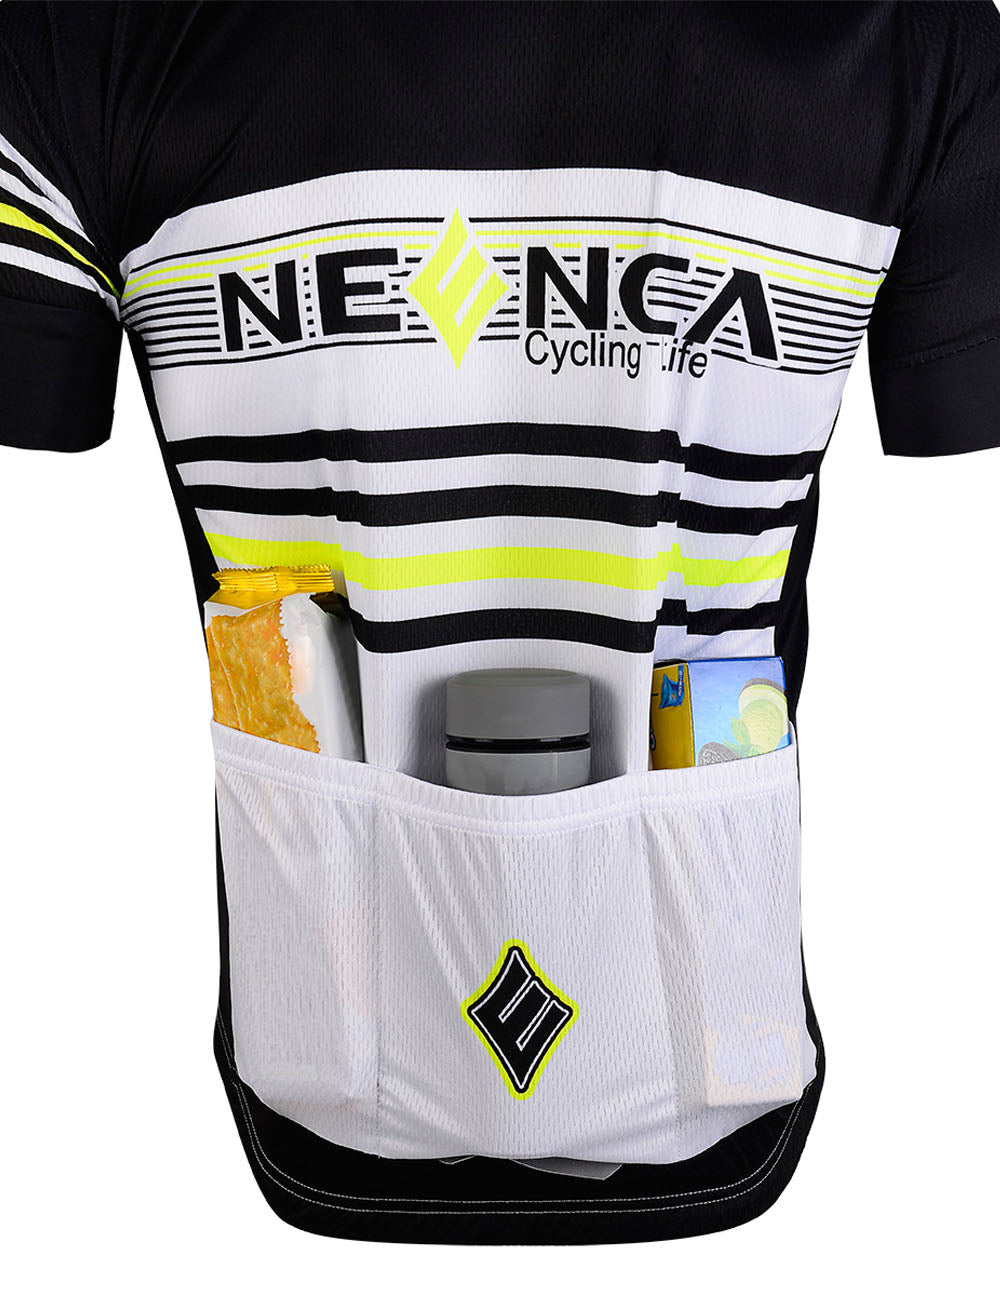 Neenca Men's Breathable Running Tops - Bike Biking Shirt